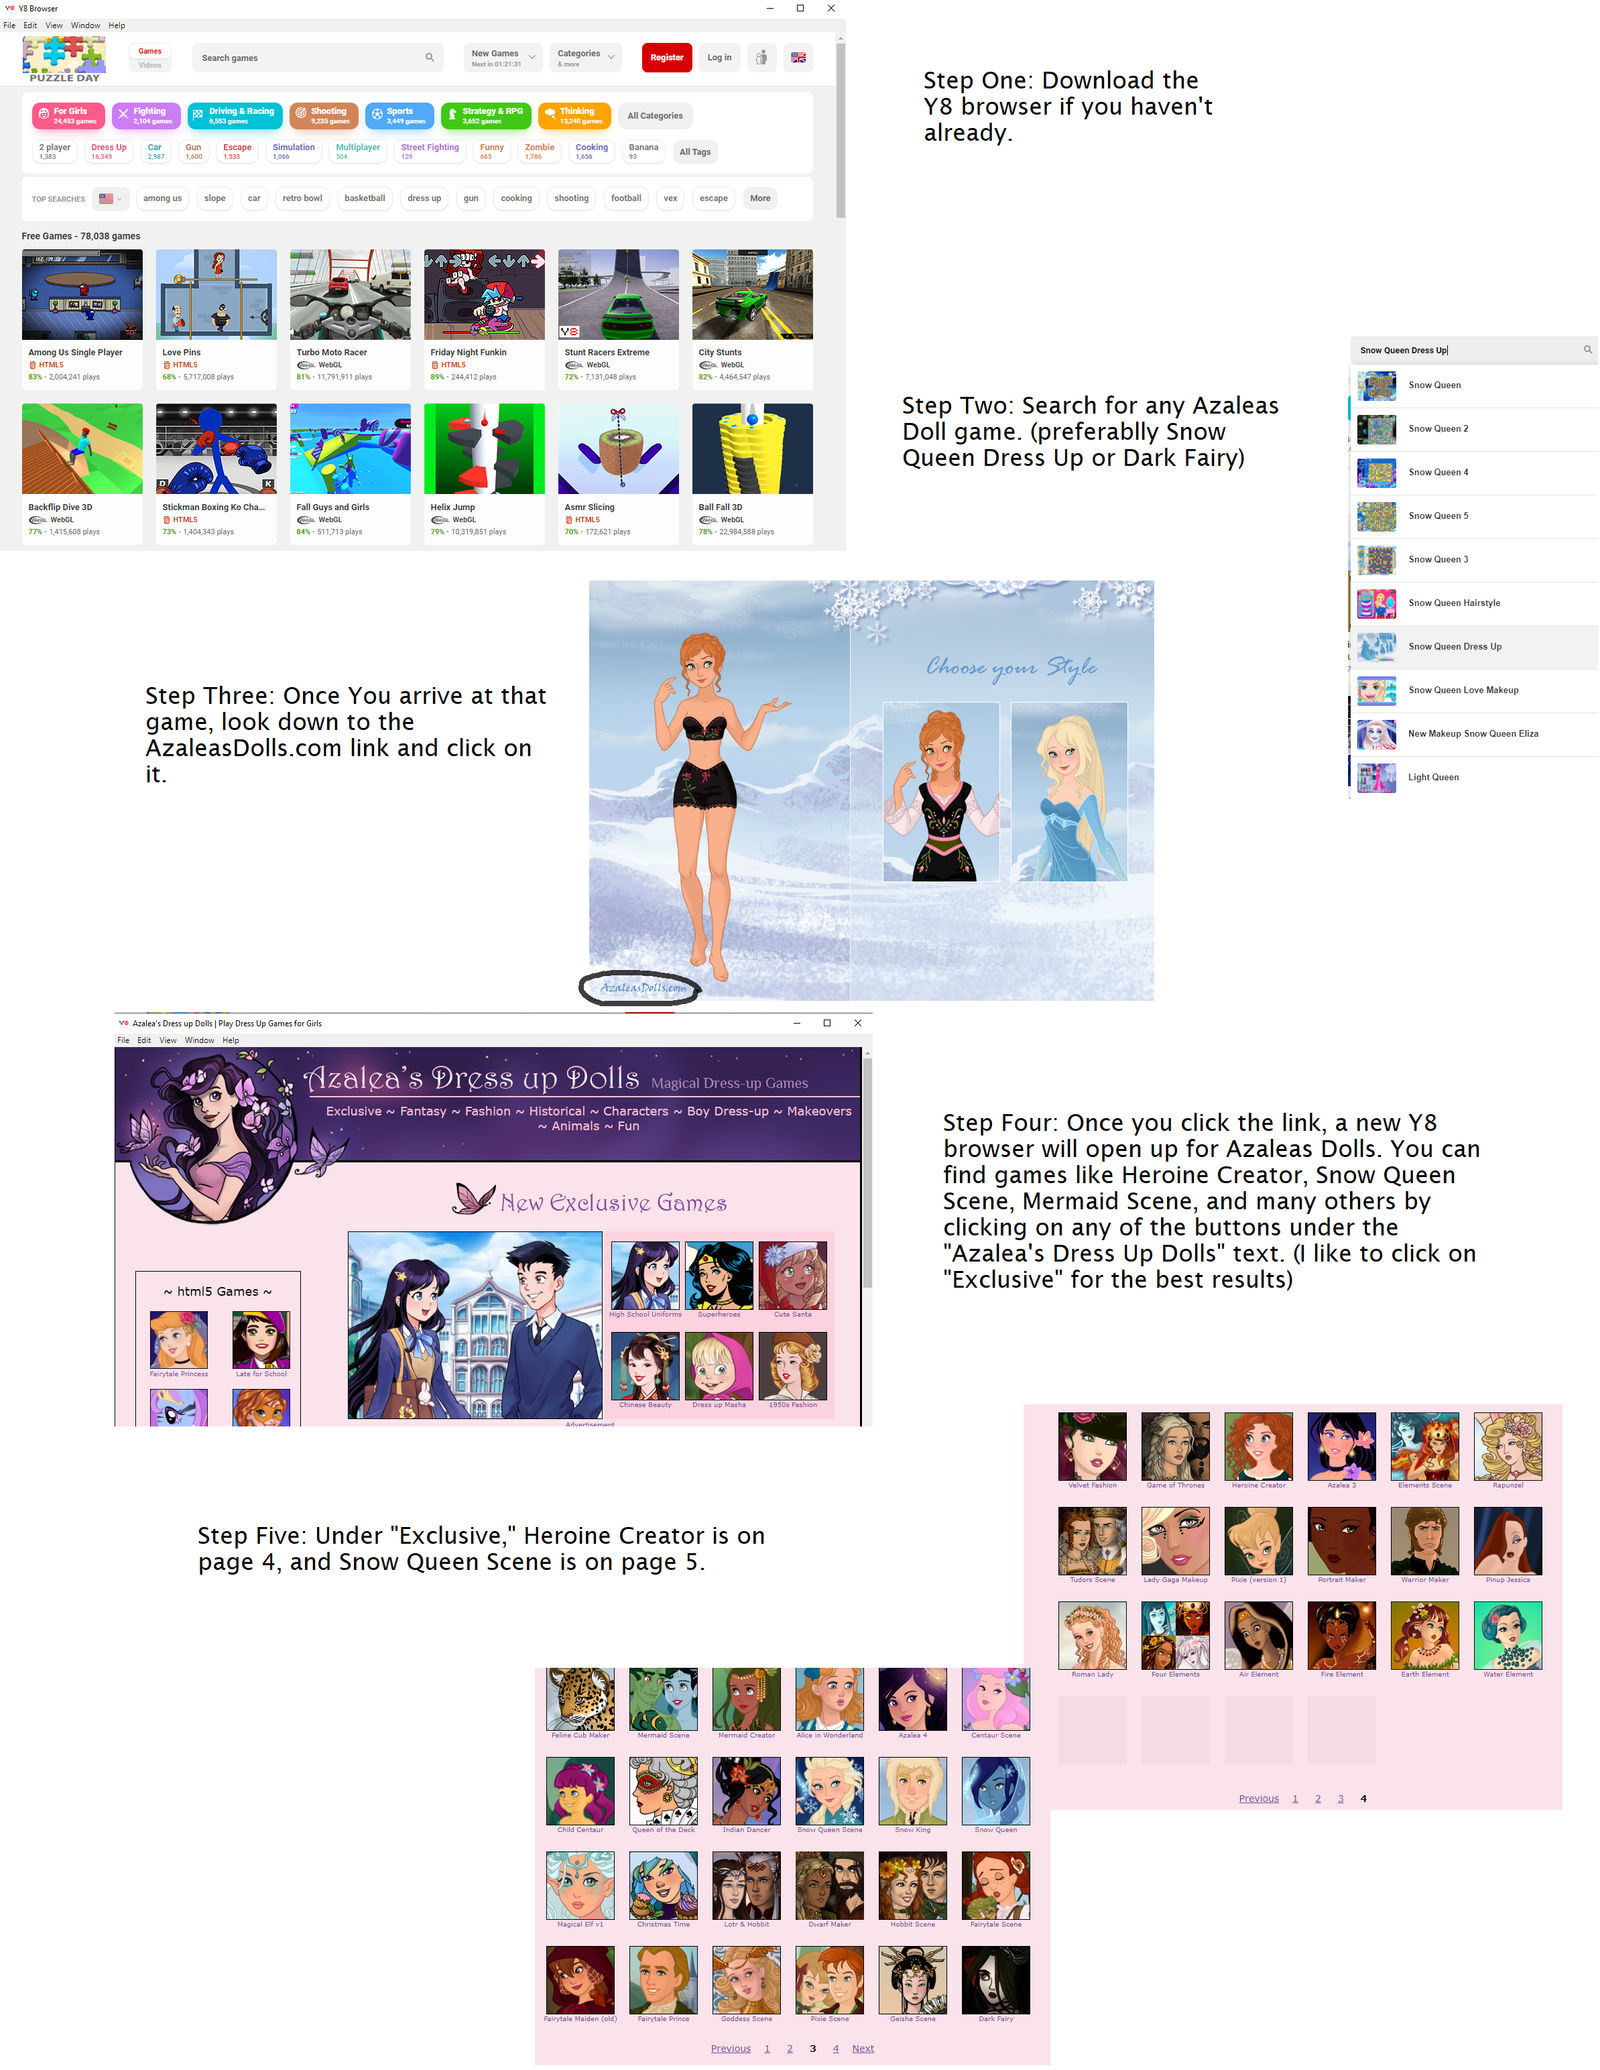 Azaleas on Y8 Browser Tutorial by MagicMovieNerd on DeviantArt